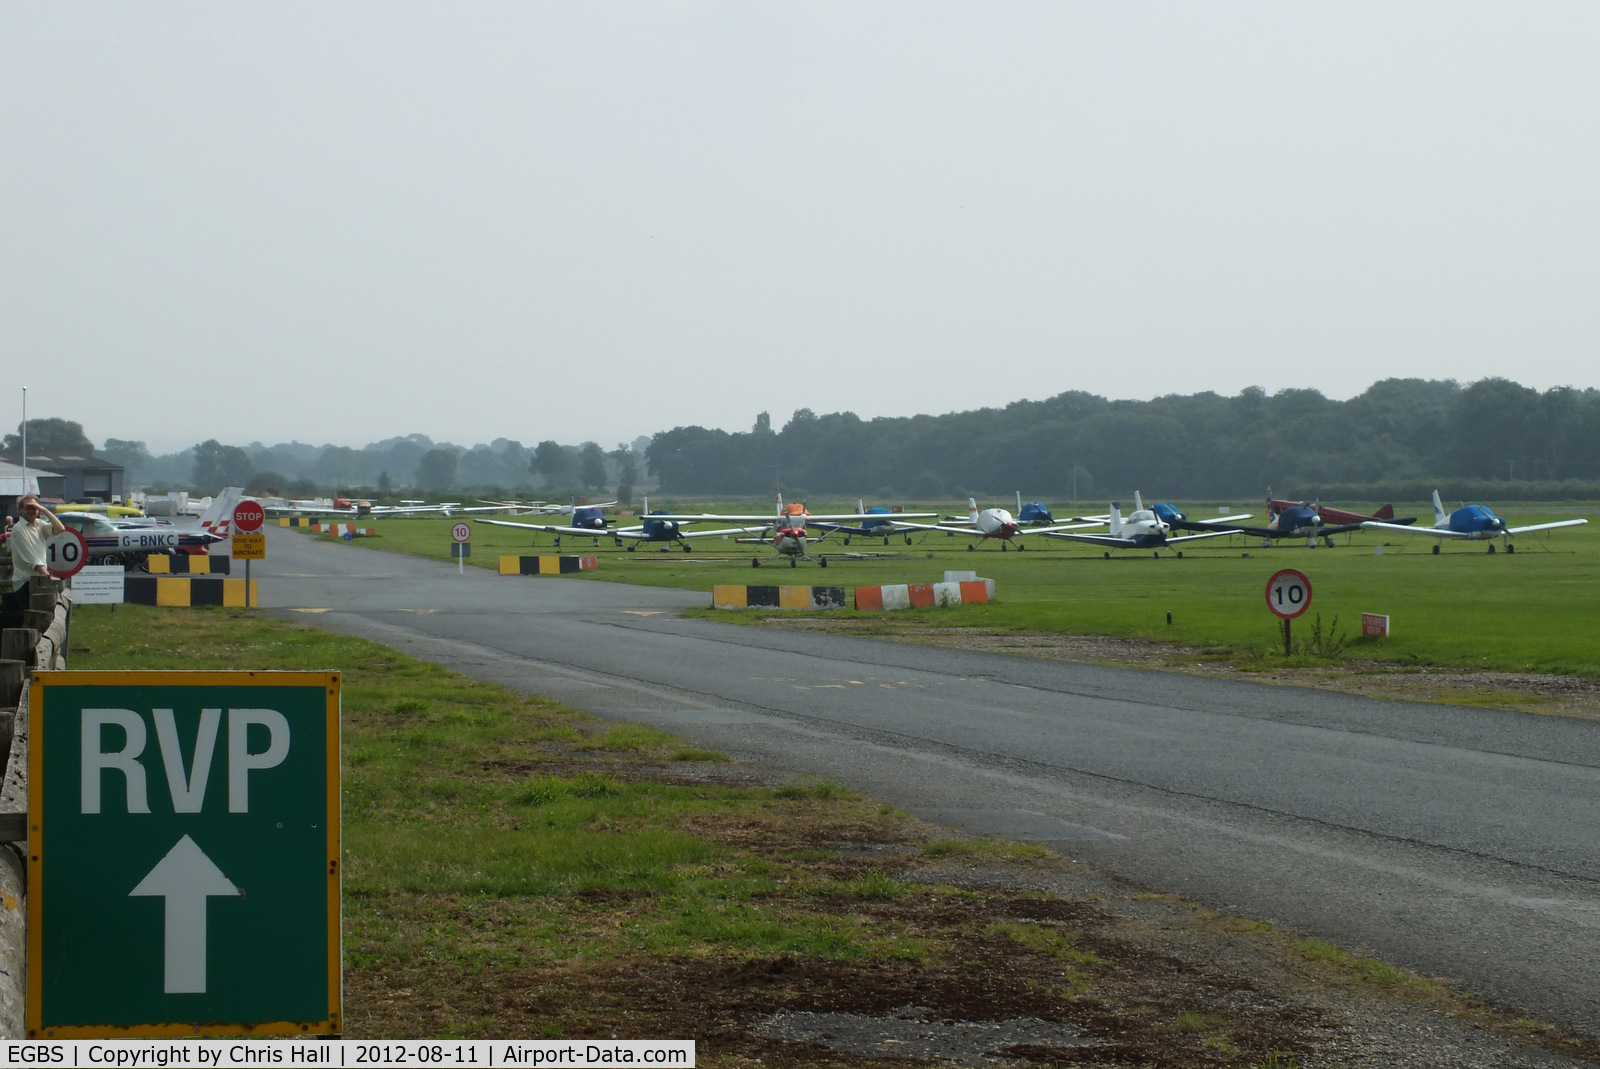 Shobdon Aerodrome Airport, Leominster, England United Kingdom (EGBS) - Shobdon Airfield, Herefordshire